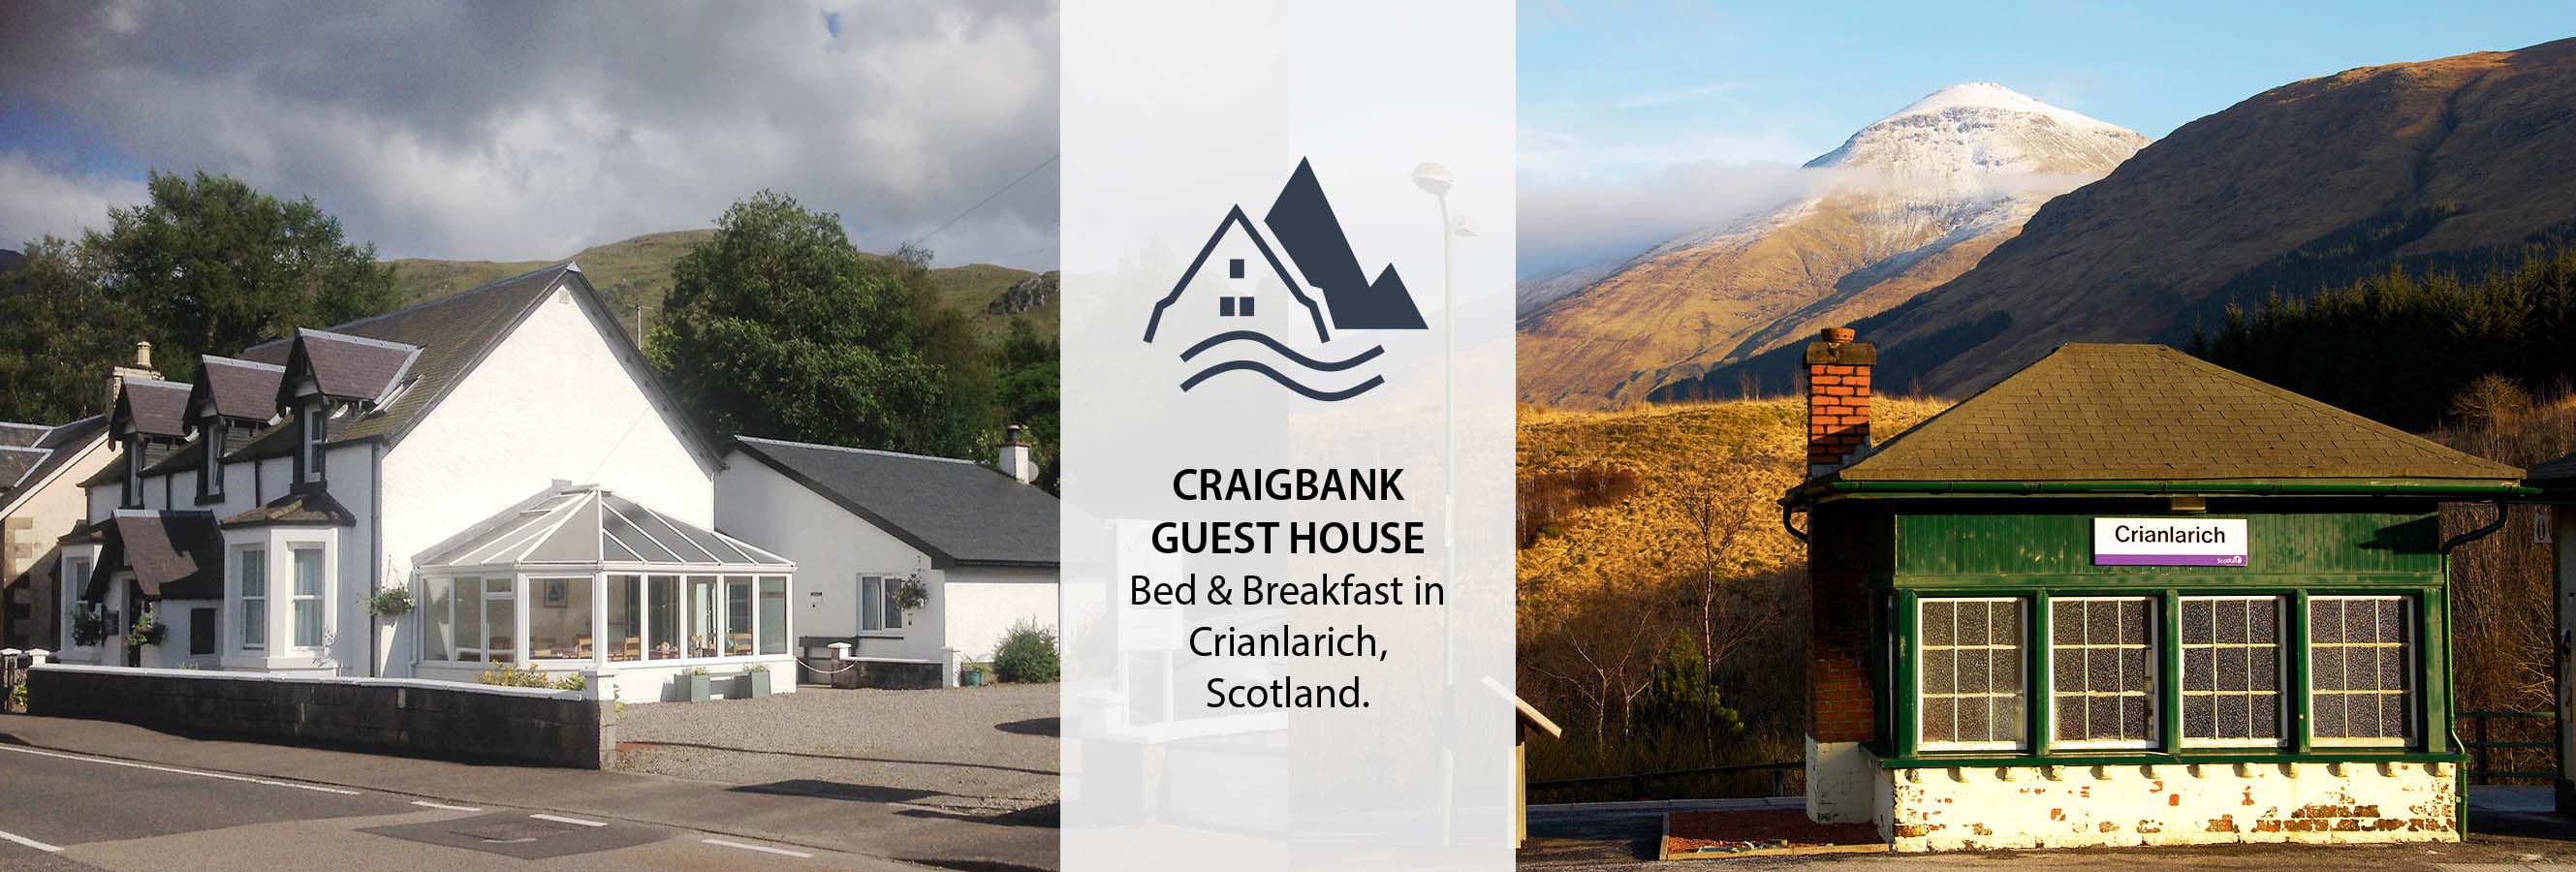 Craigbank Guest House